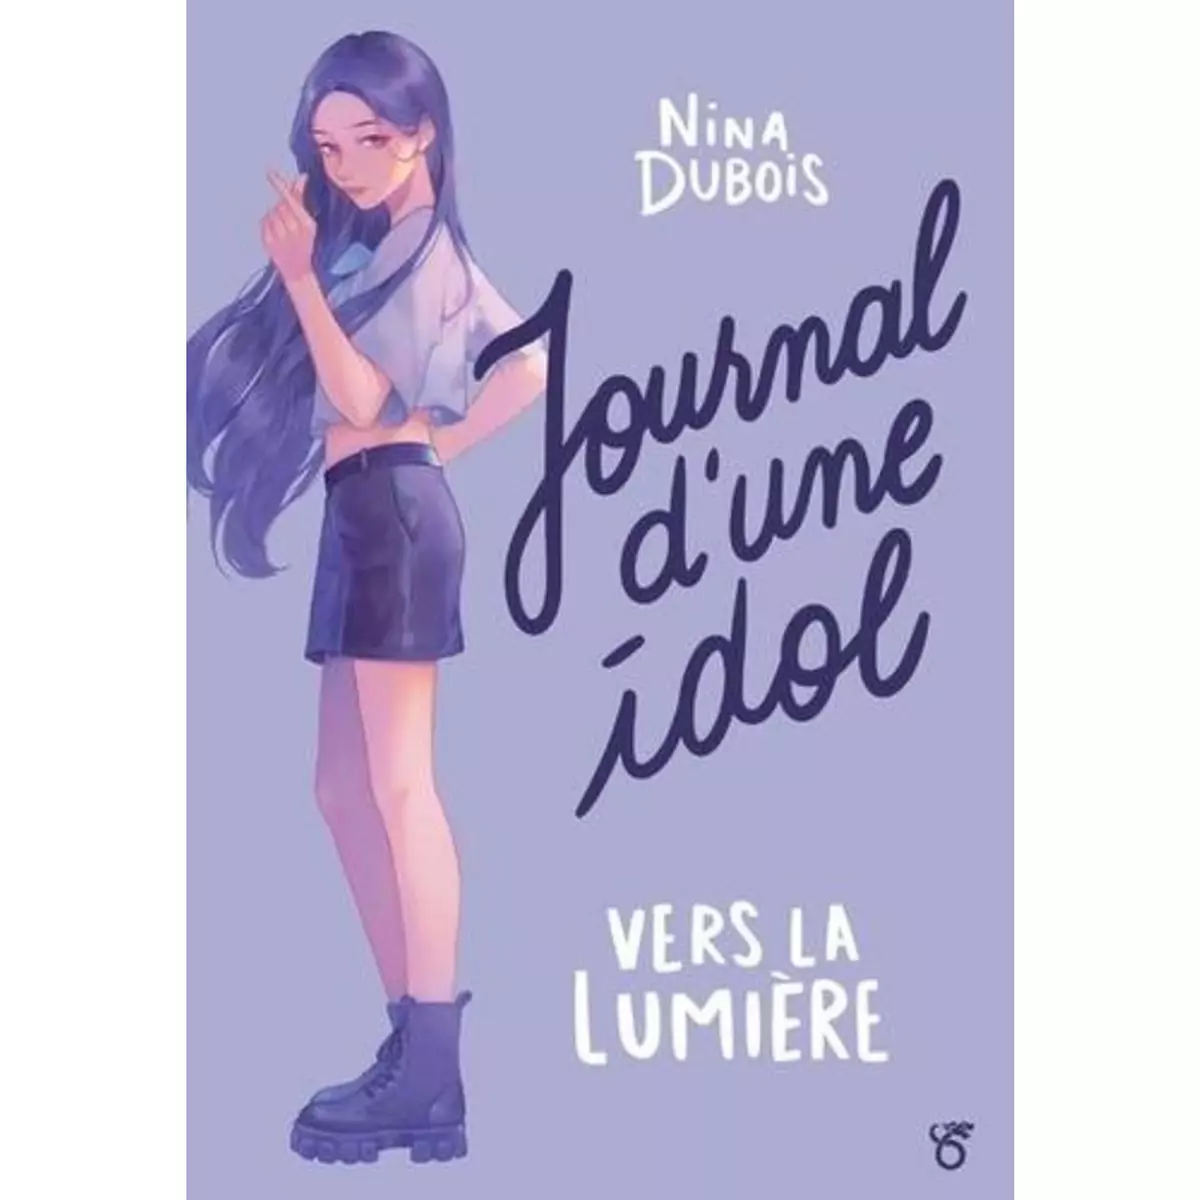  JOURNAL D'UNE IDOL, Dubois Nina